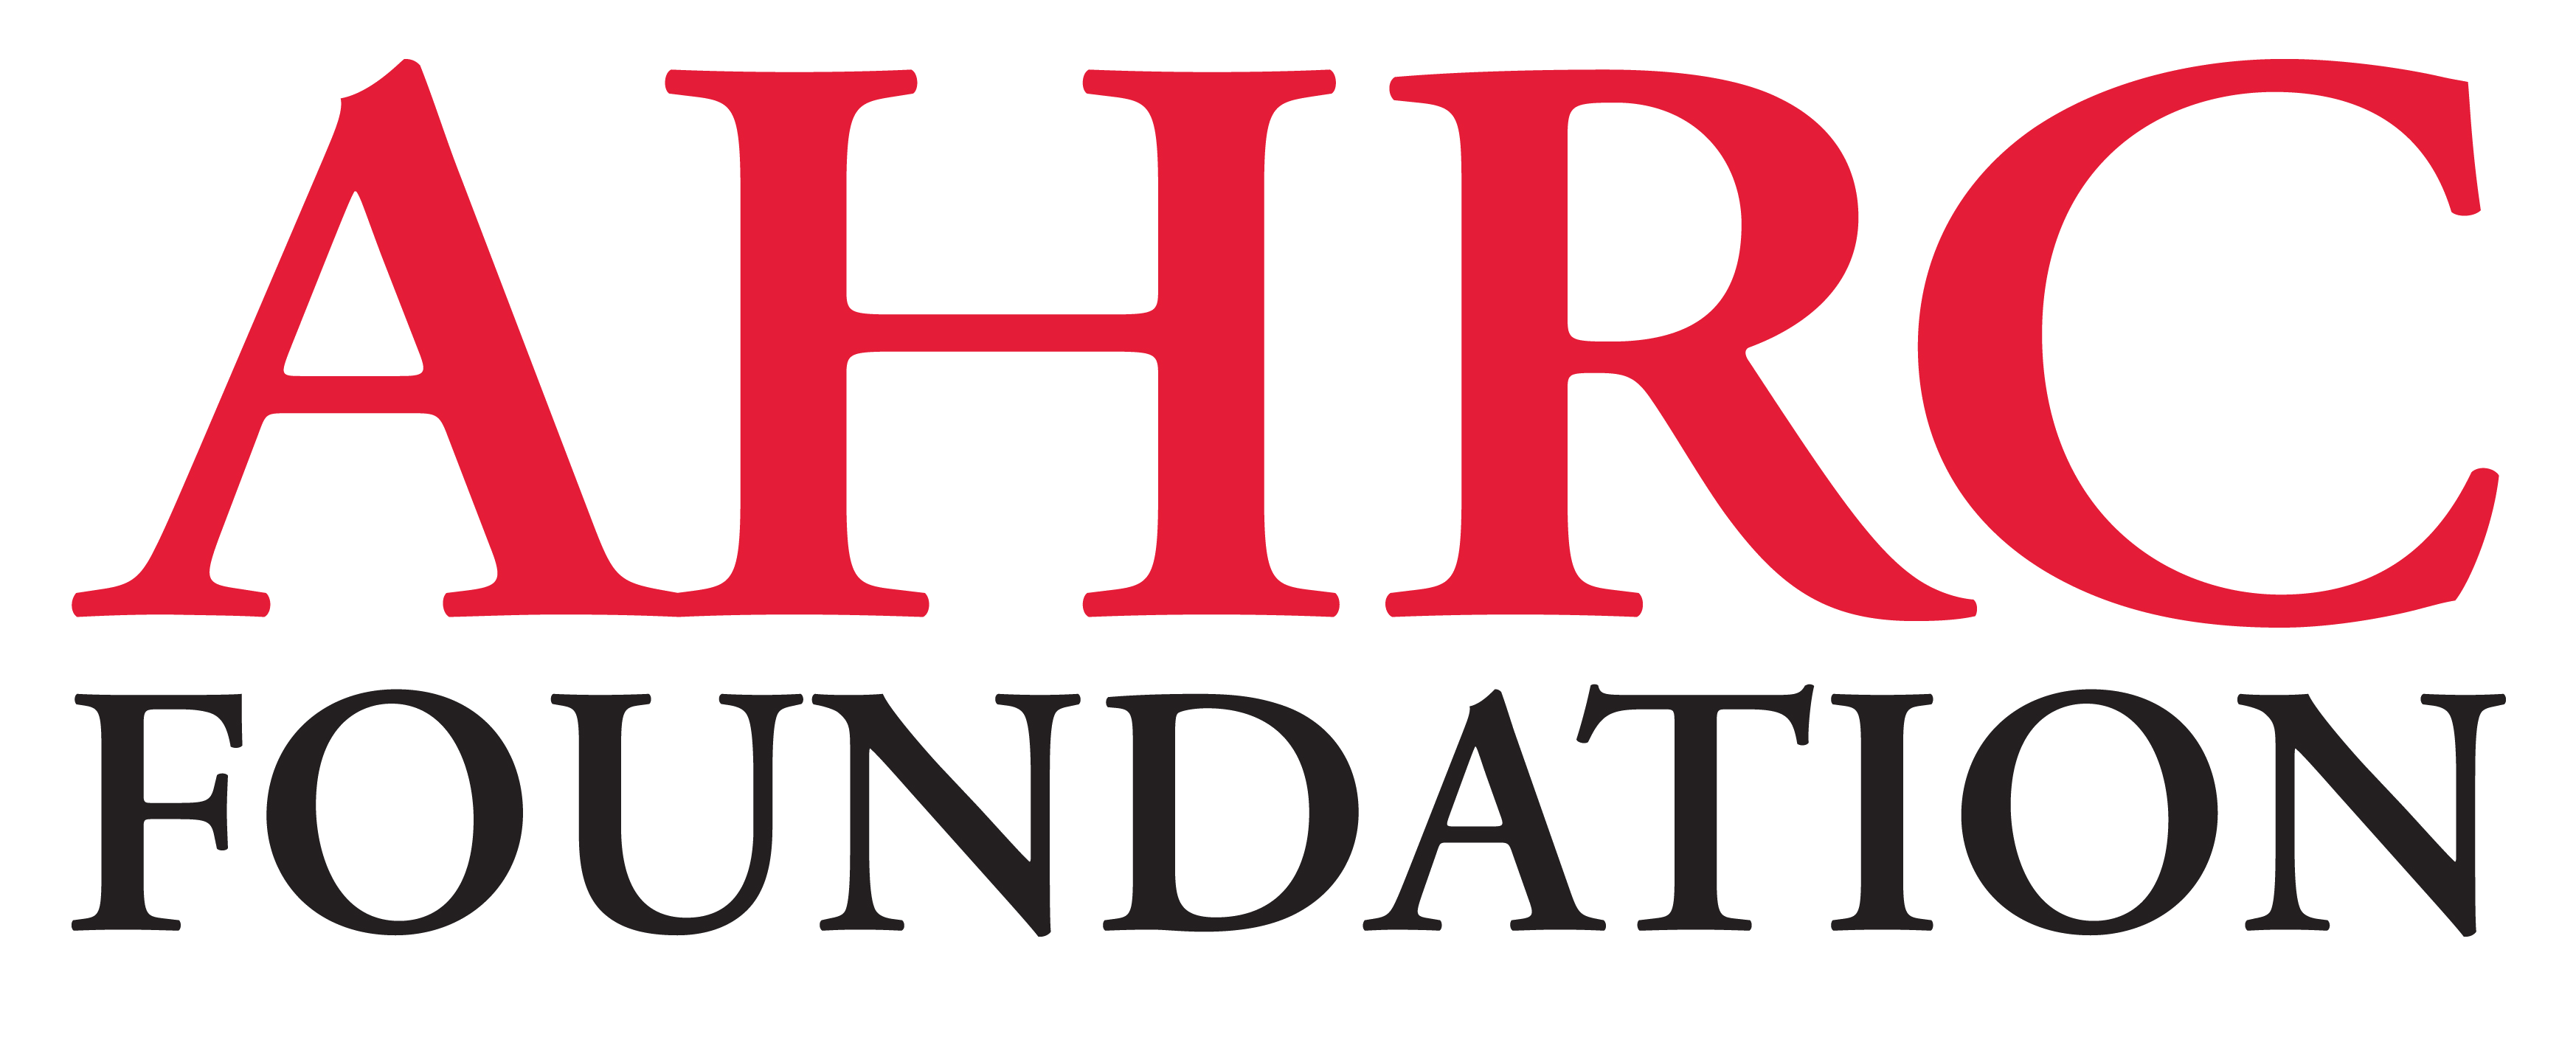 ahrc foundation logo 123.png